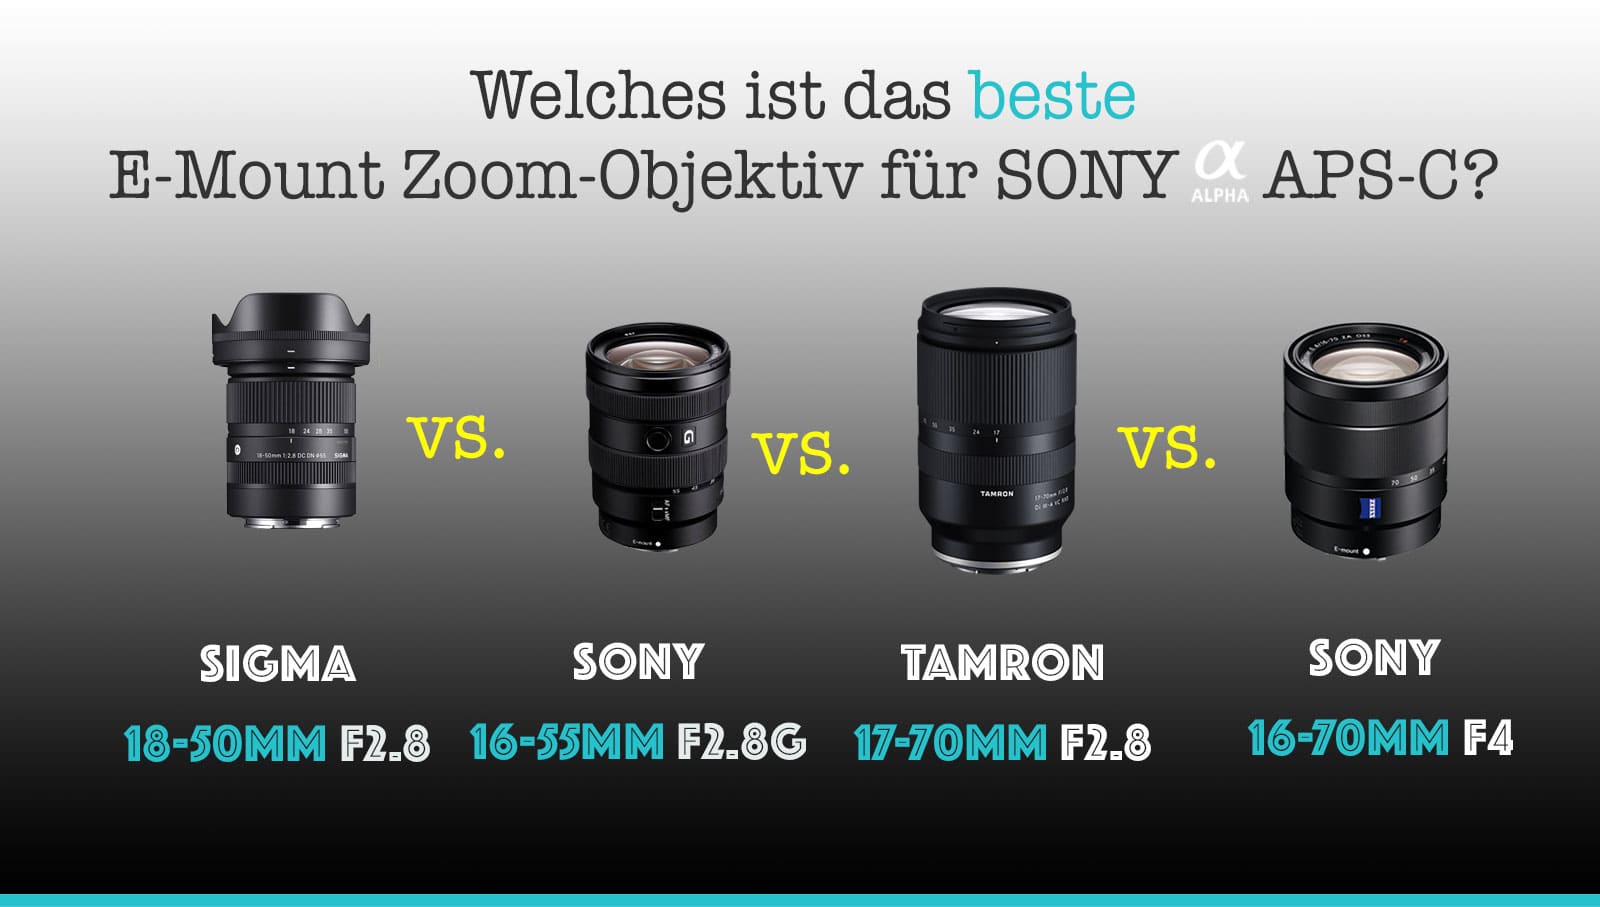 18-50mm Vergleich 17-70mm 16-70mm Sony Sigma 16-55mm Tamron vs. Sony vs. vs.